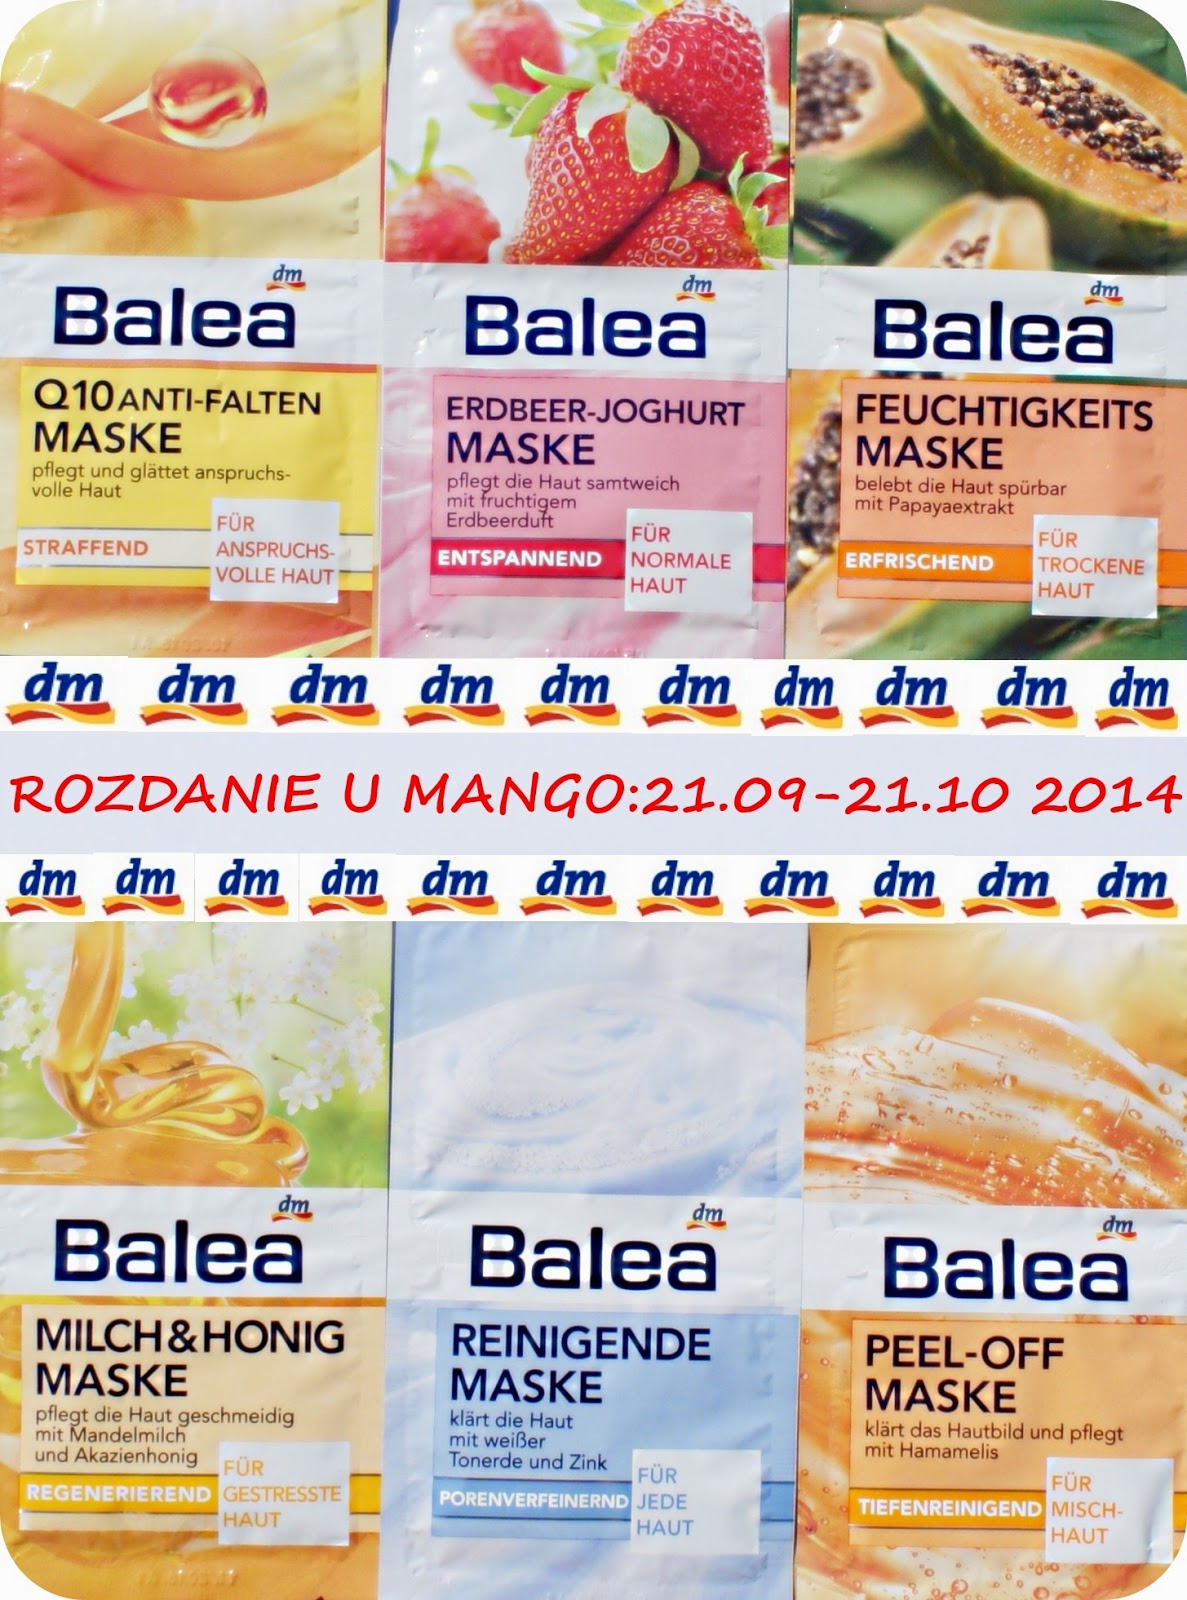 http://mangomania78.blogspot.com/2014/09/rozdanie-z-balea.html